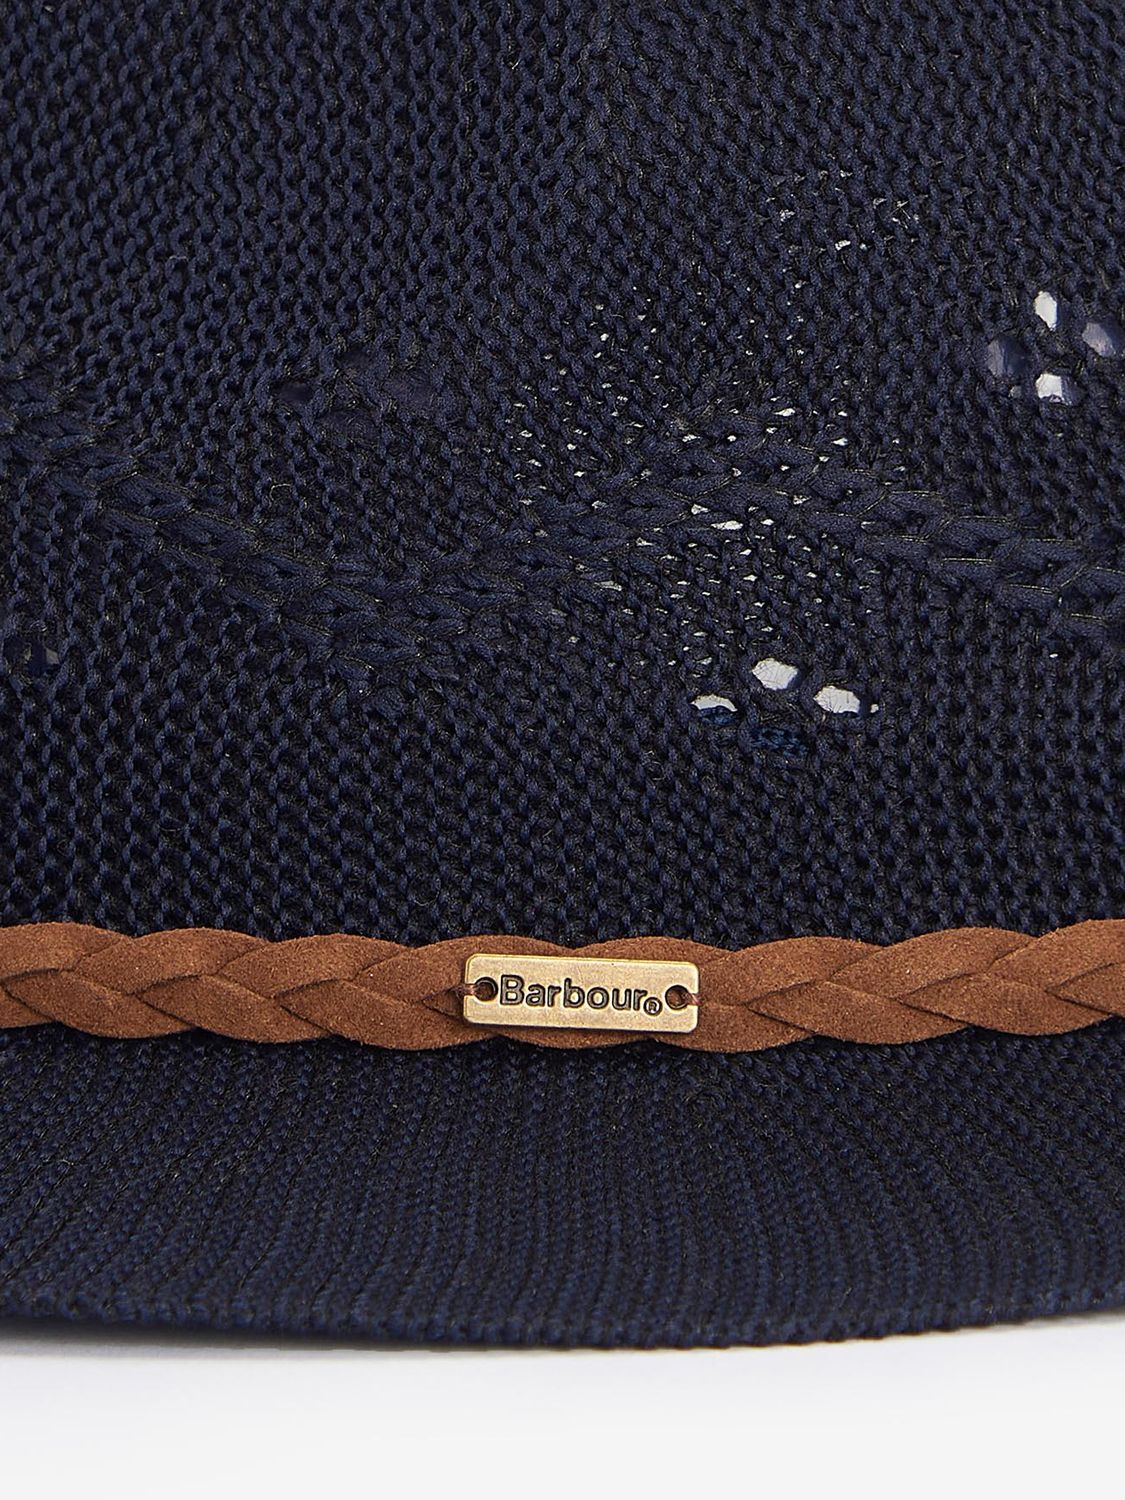 Buy Barbour Flowerdale Crochet Trilby Hat Online at johnlewis.com